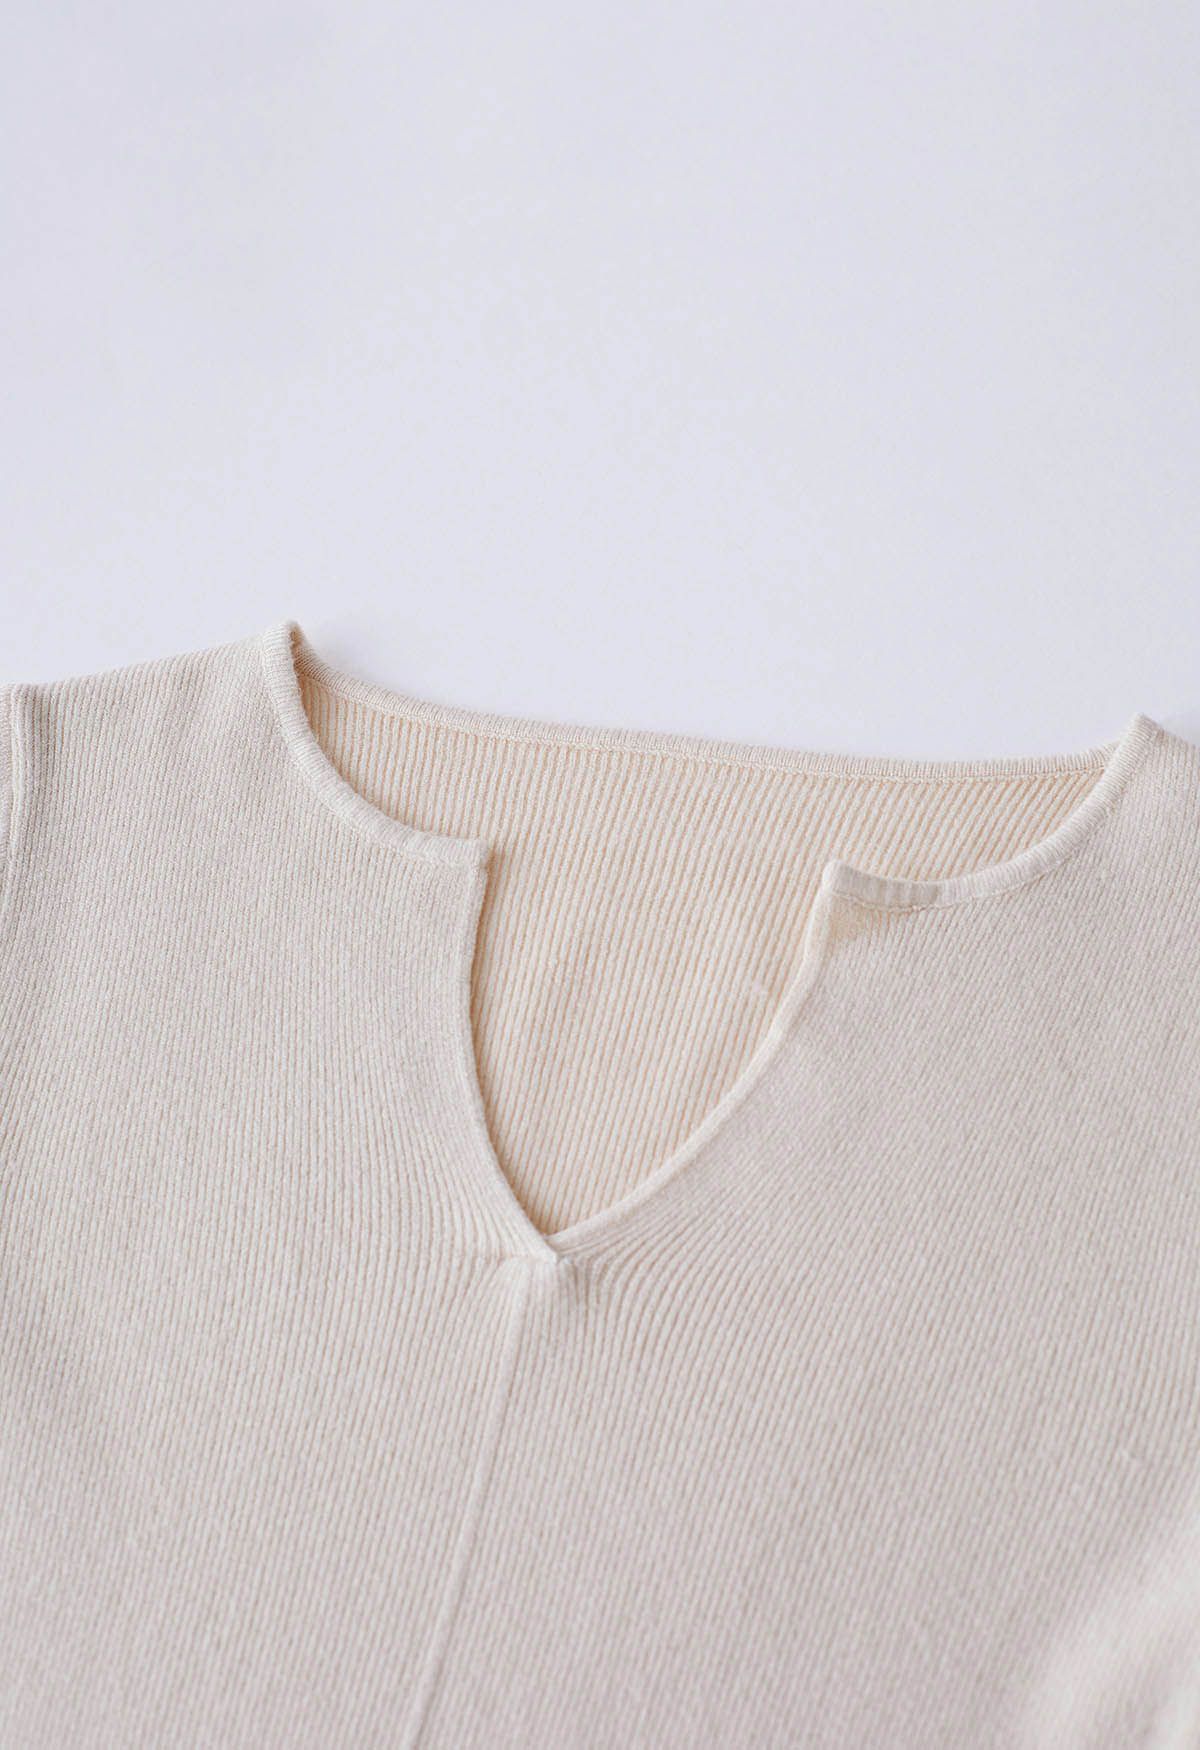 Notch Neckline Fitted Knit Top in Cream